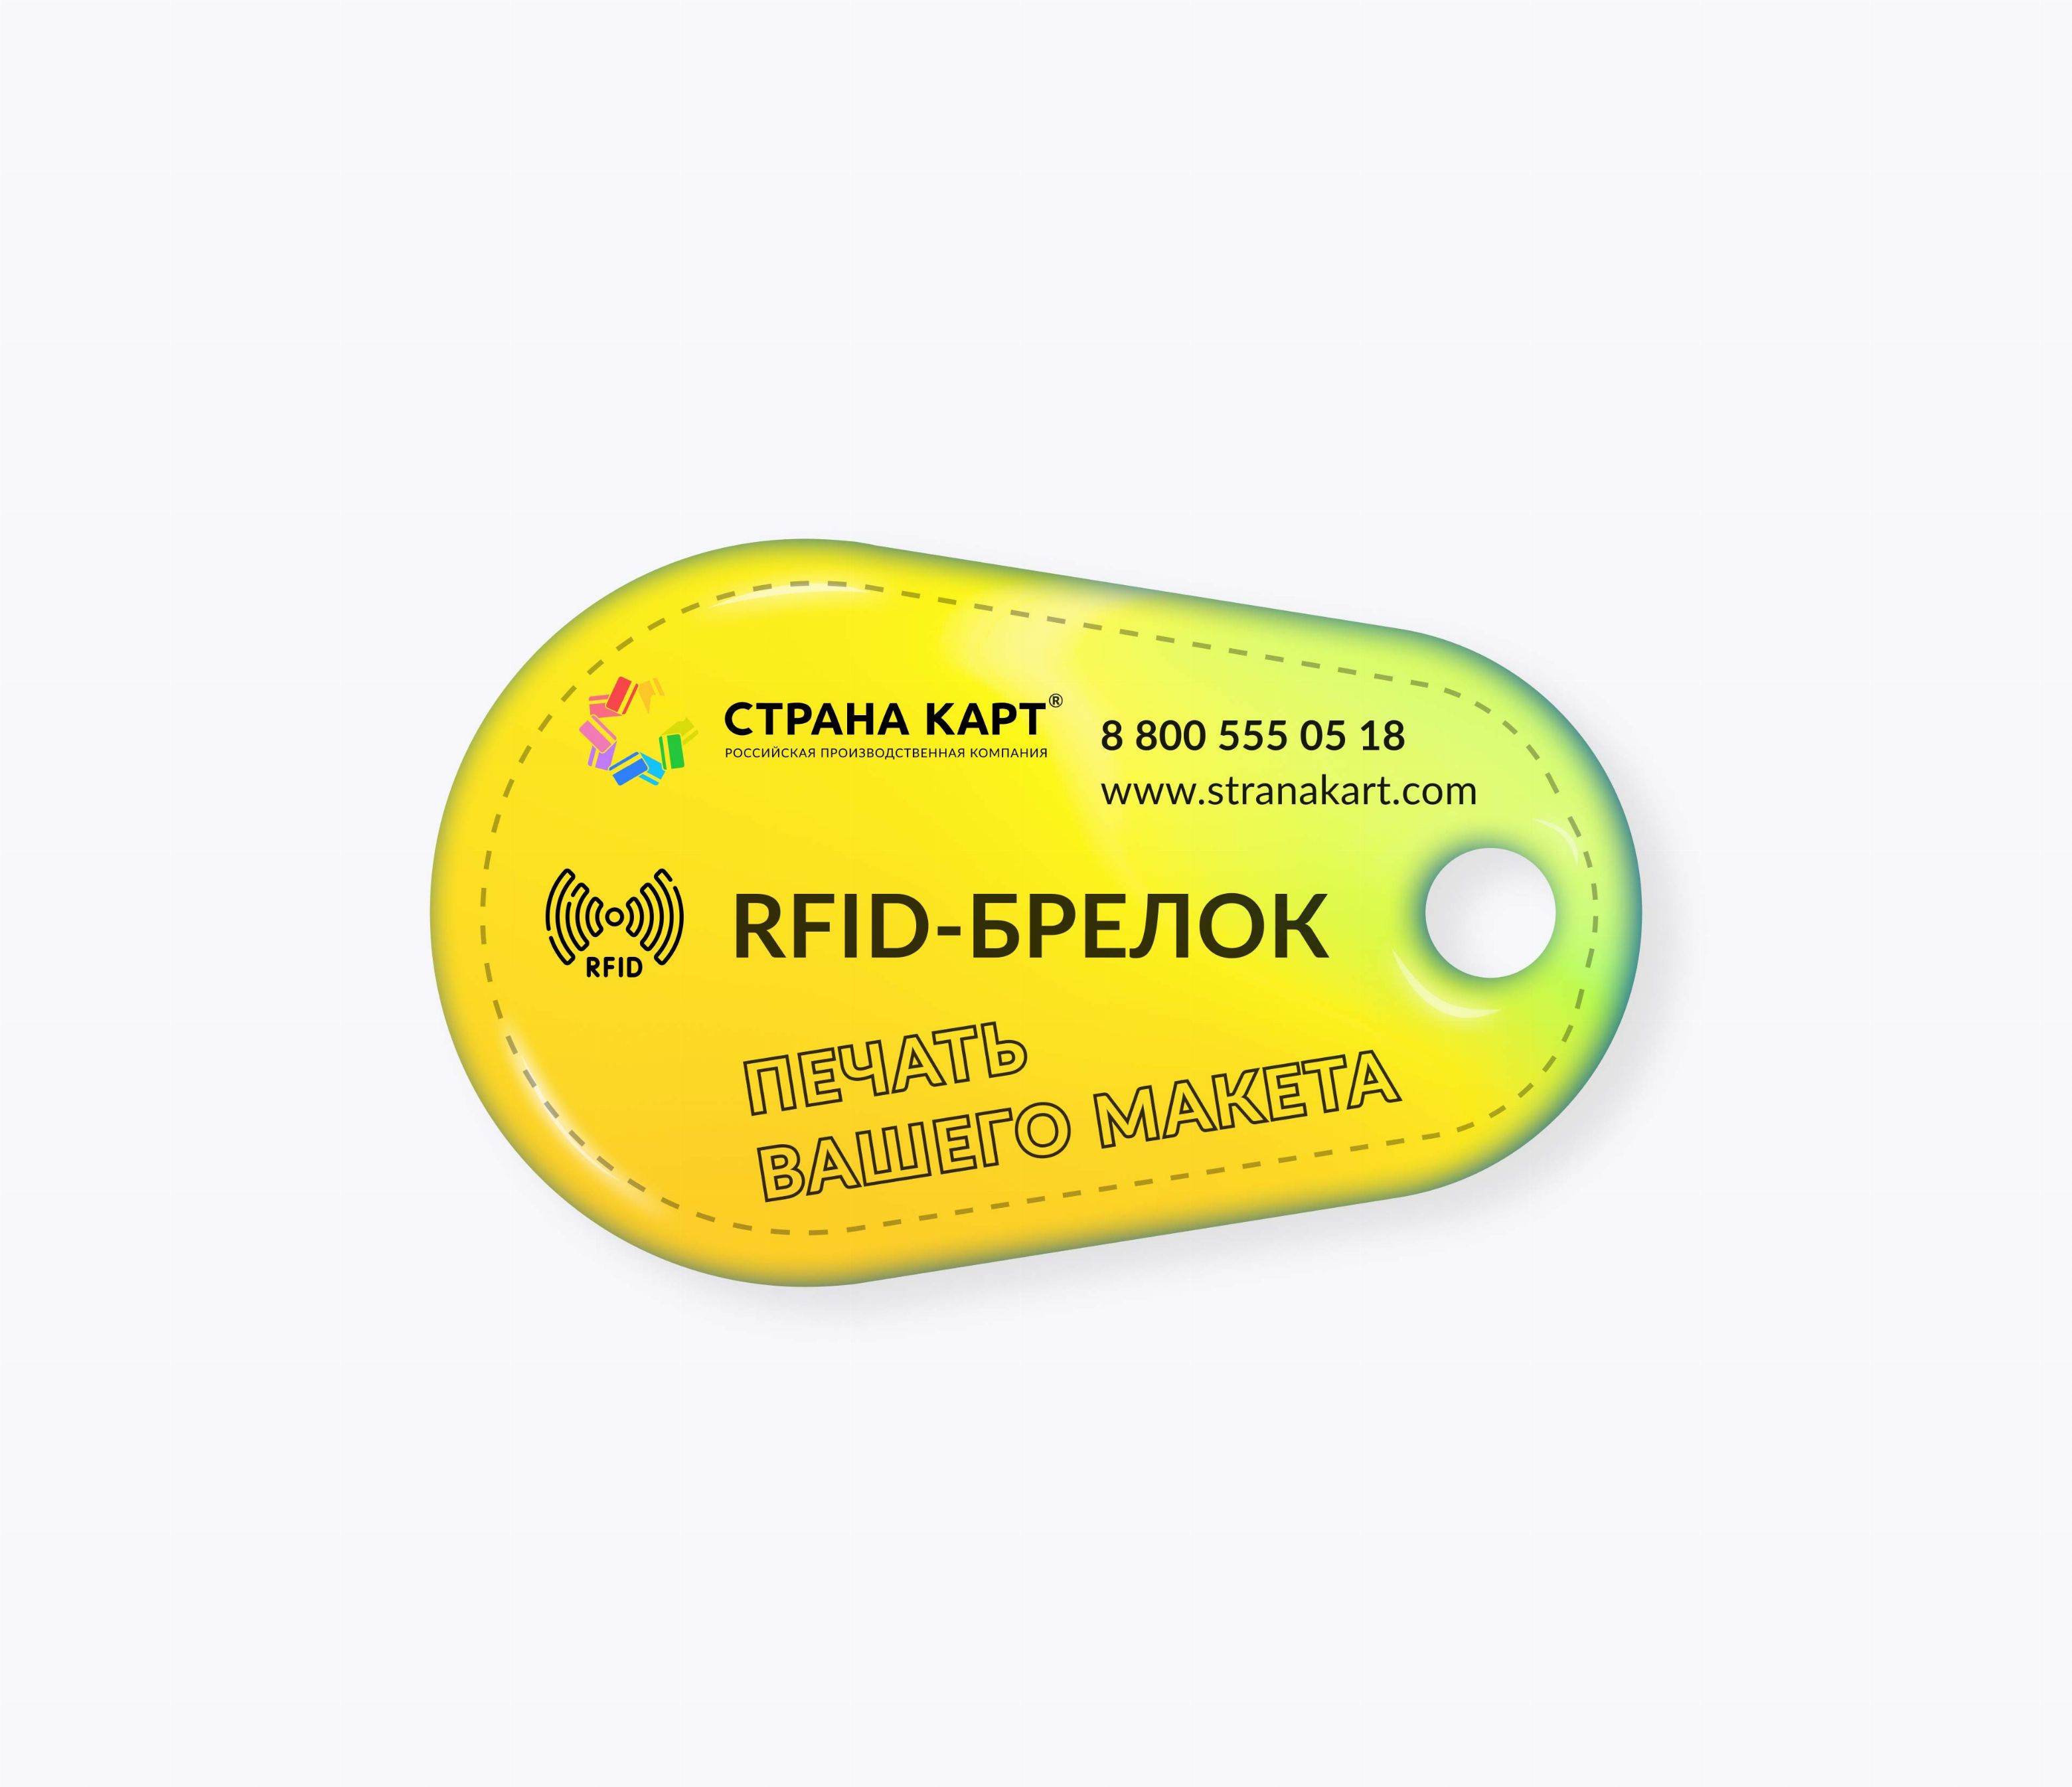 Каплевидные RFID-брелоки NEOKEY® с чипом SMARTTAG 1k 4 byte nUID RFID-брелоки NEOKEY® с чипом SMARTTAG 1k 4 byte nUID и вашим логотипом